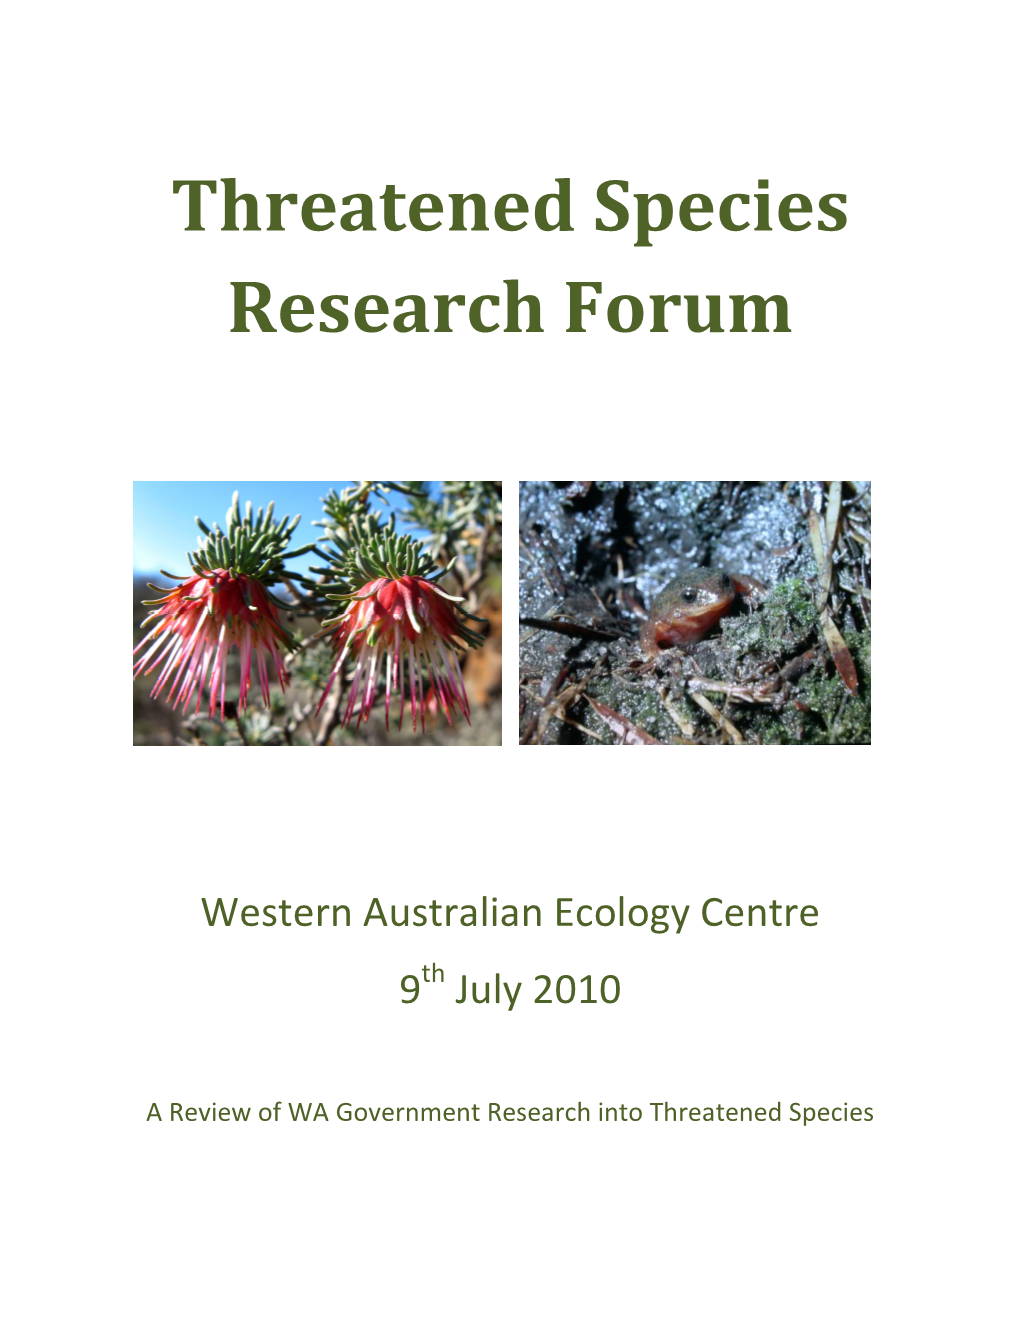 Threatened Species Research Forum